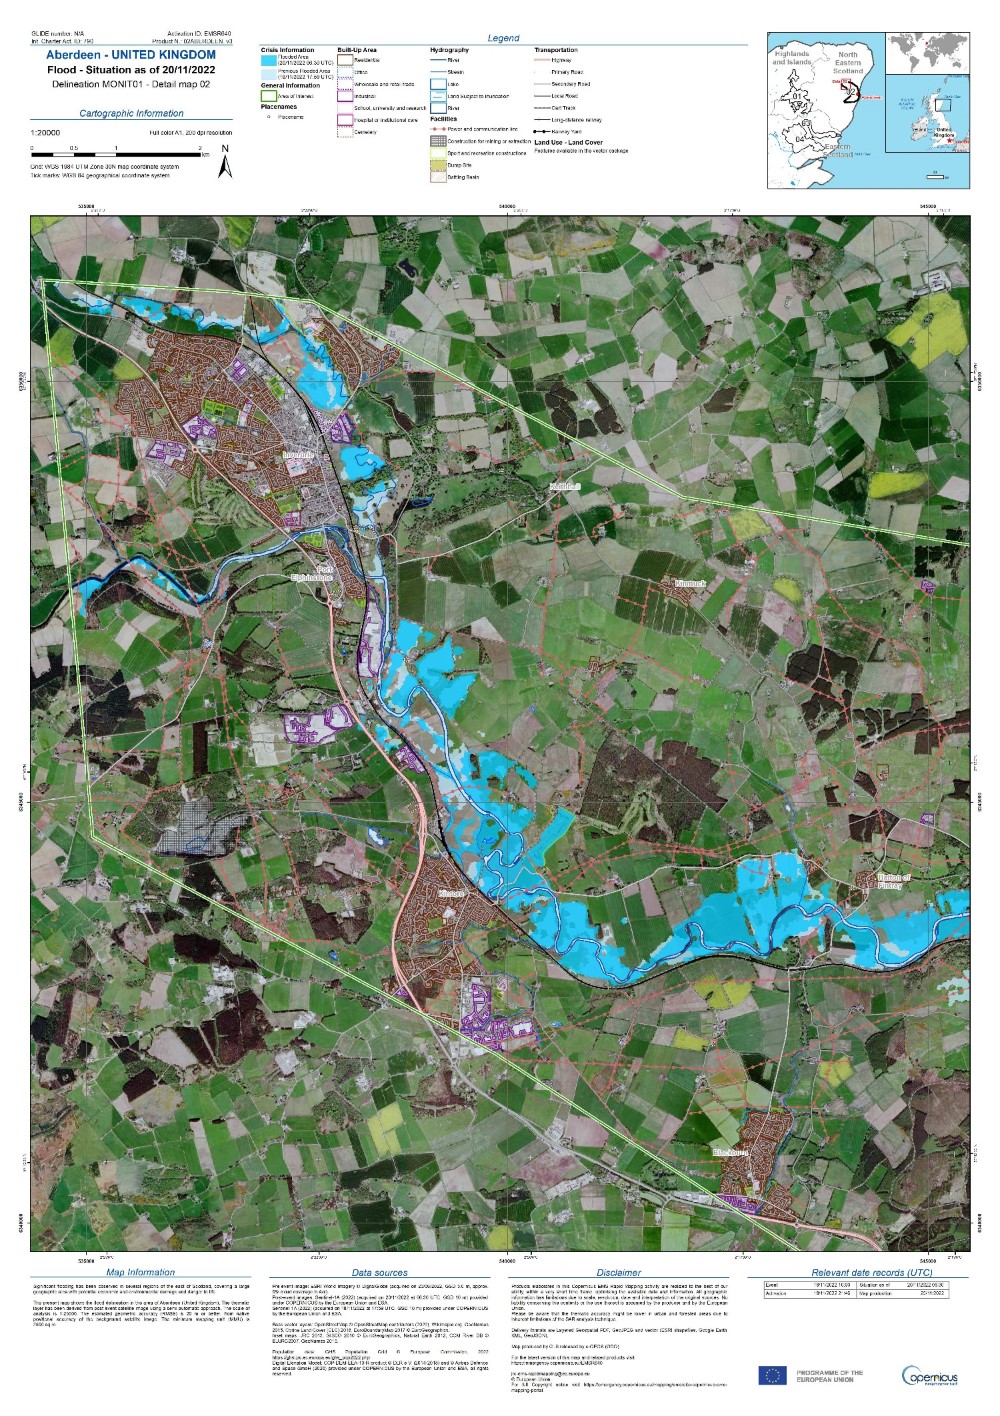 7.	Copernicus EMS image showing flooding along the River Don, Aberdeenshire, Scotland, United Kingdom in November 2022